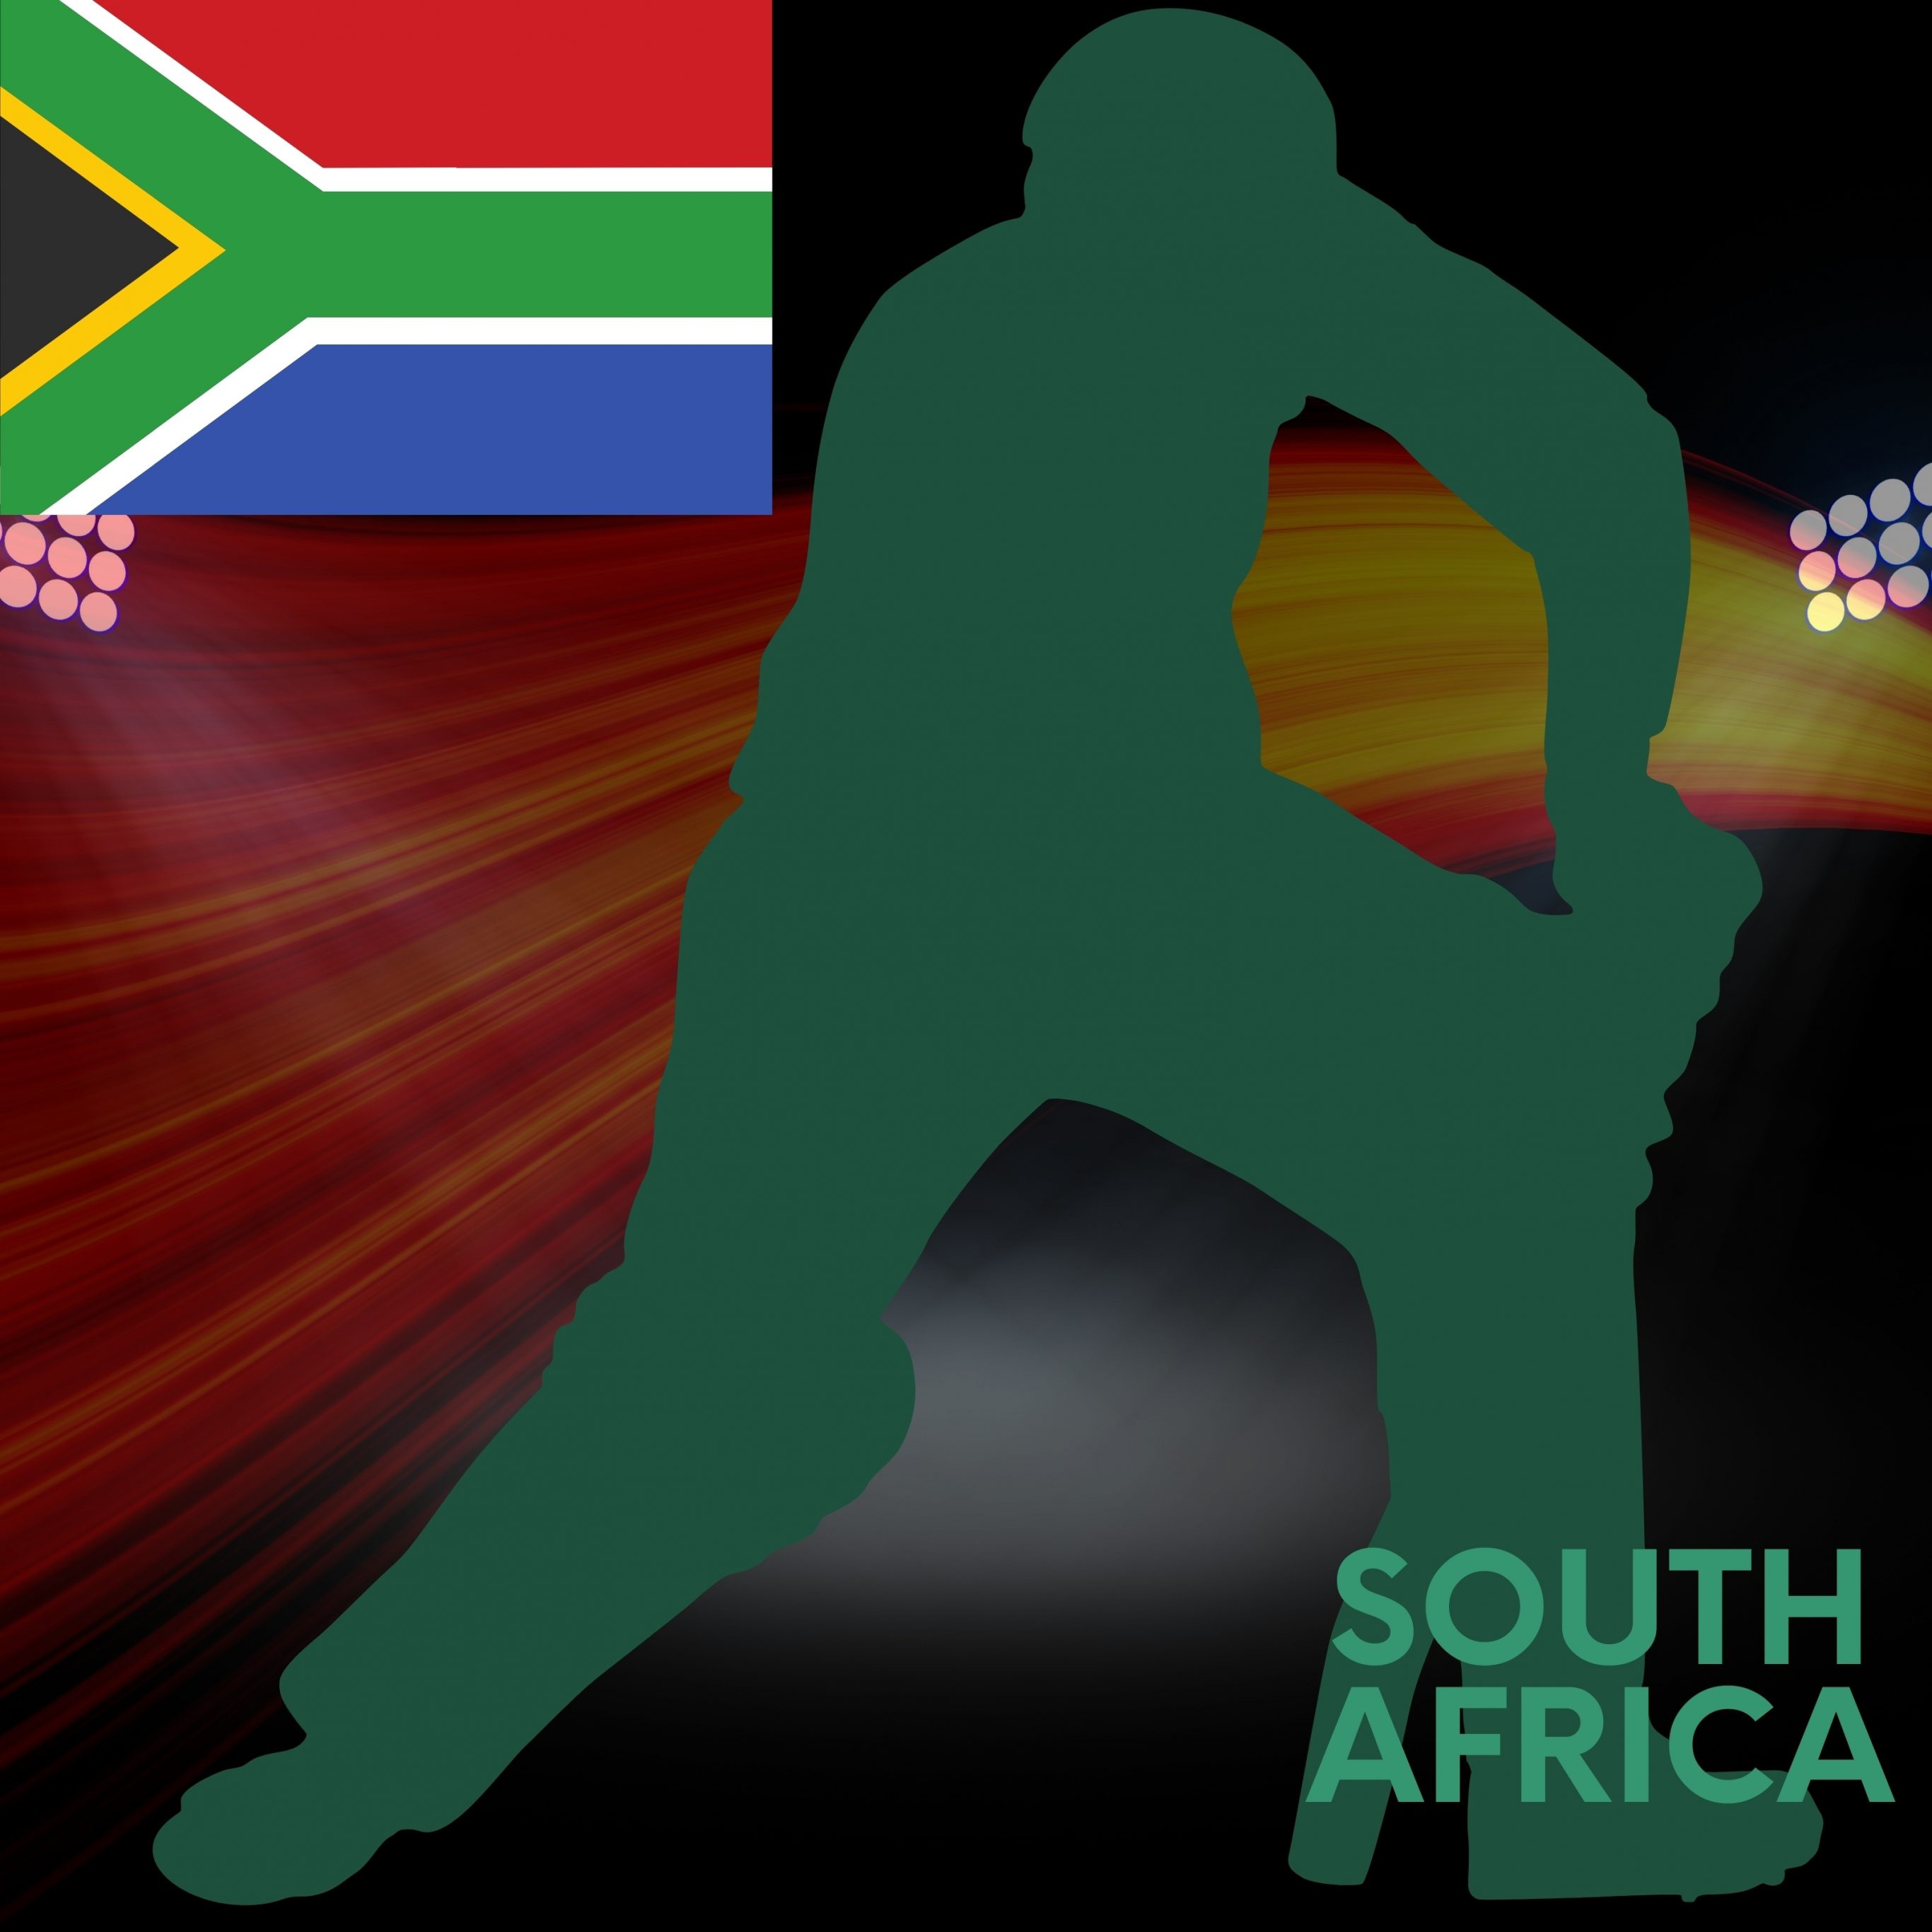 2732x2732 wallpapers 4k iPad Pro South Africa Cricket Stadium iPad Wallpaper 2732x2732 pixels resolution